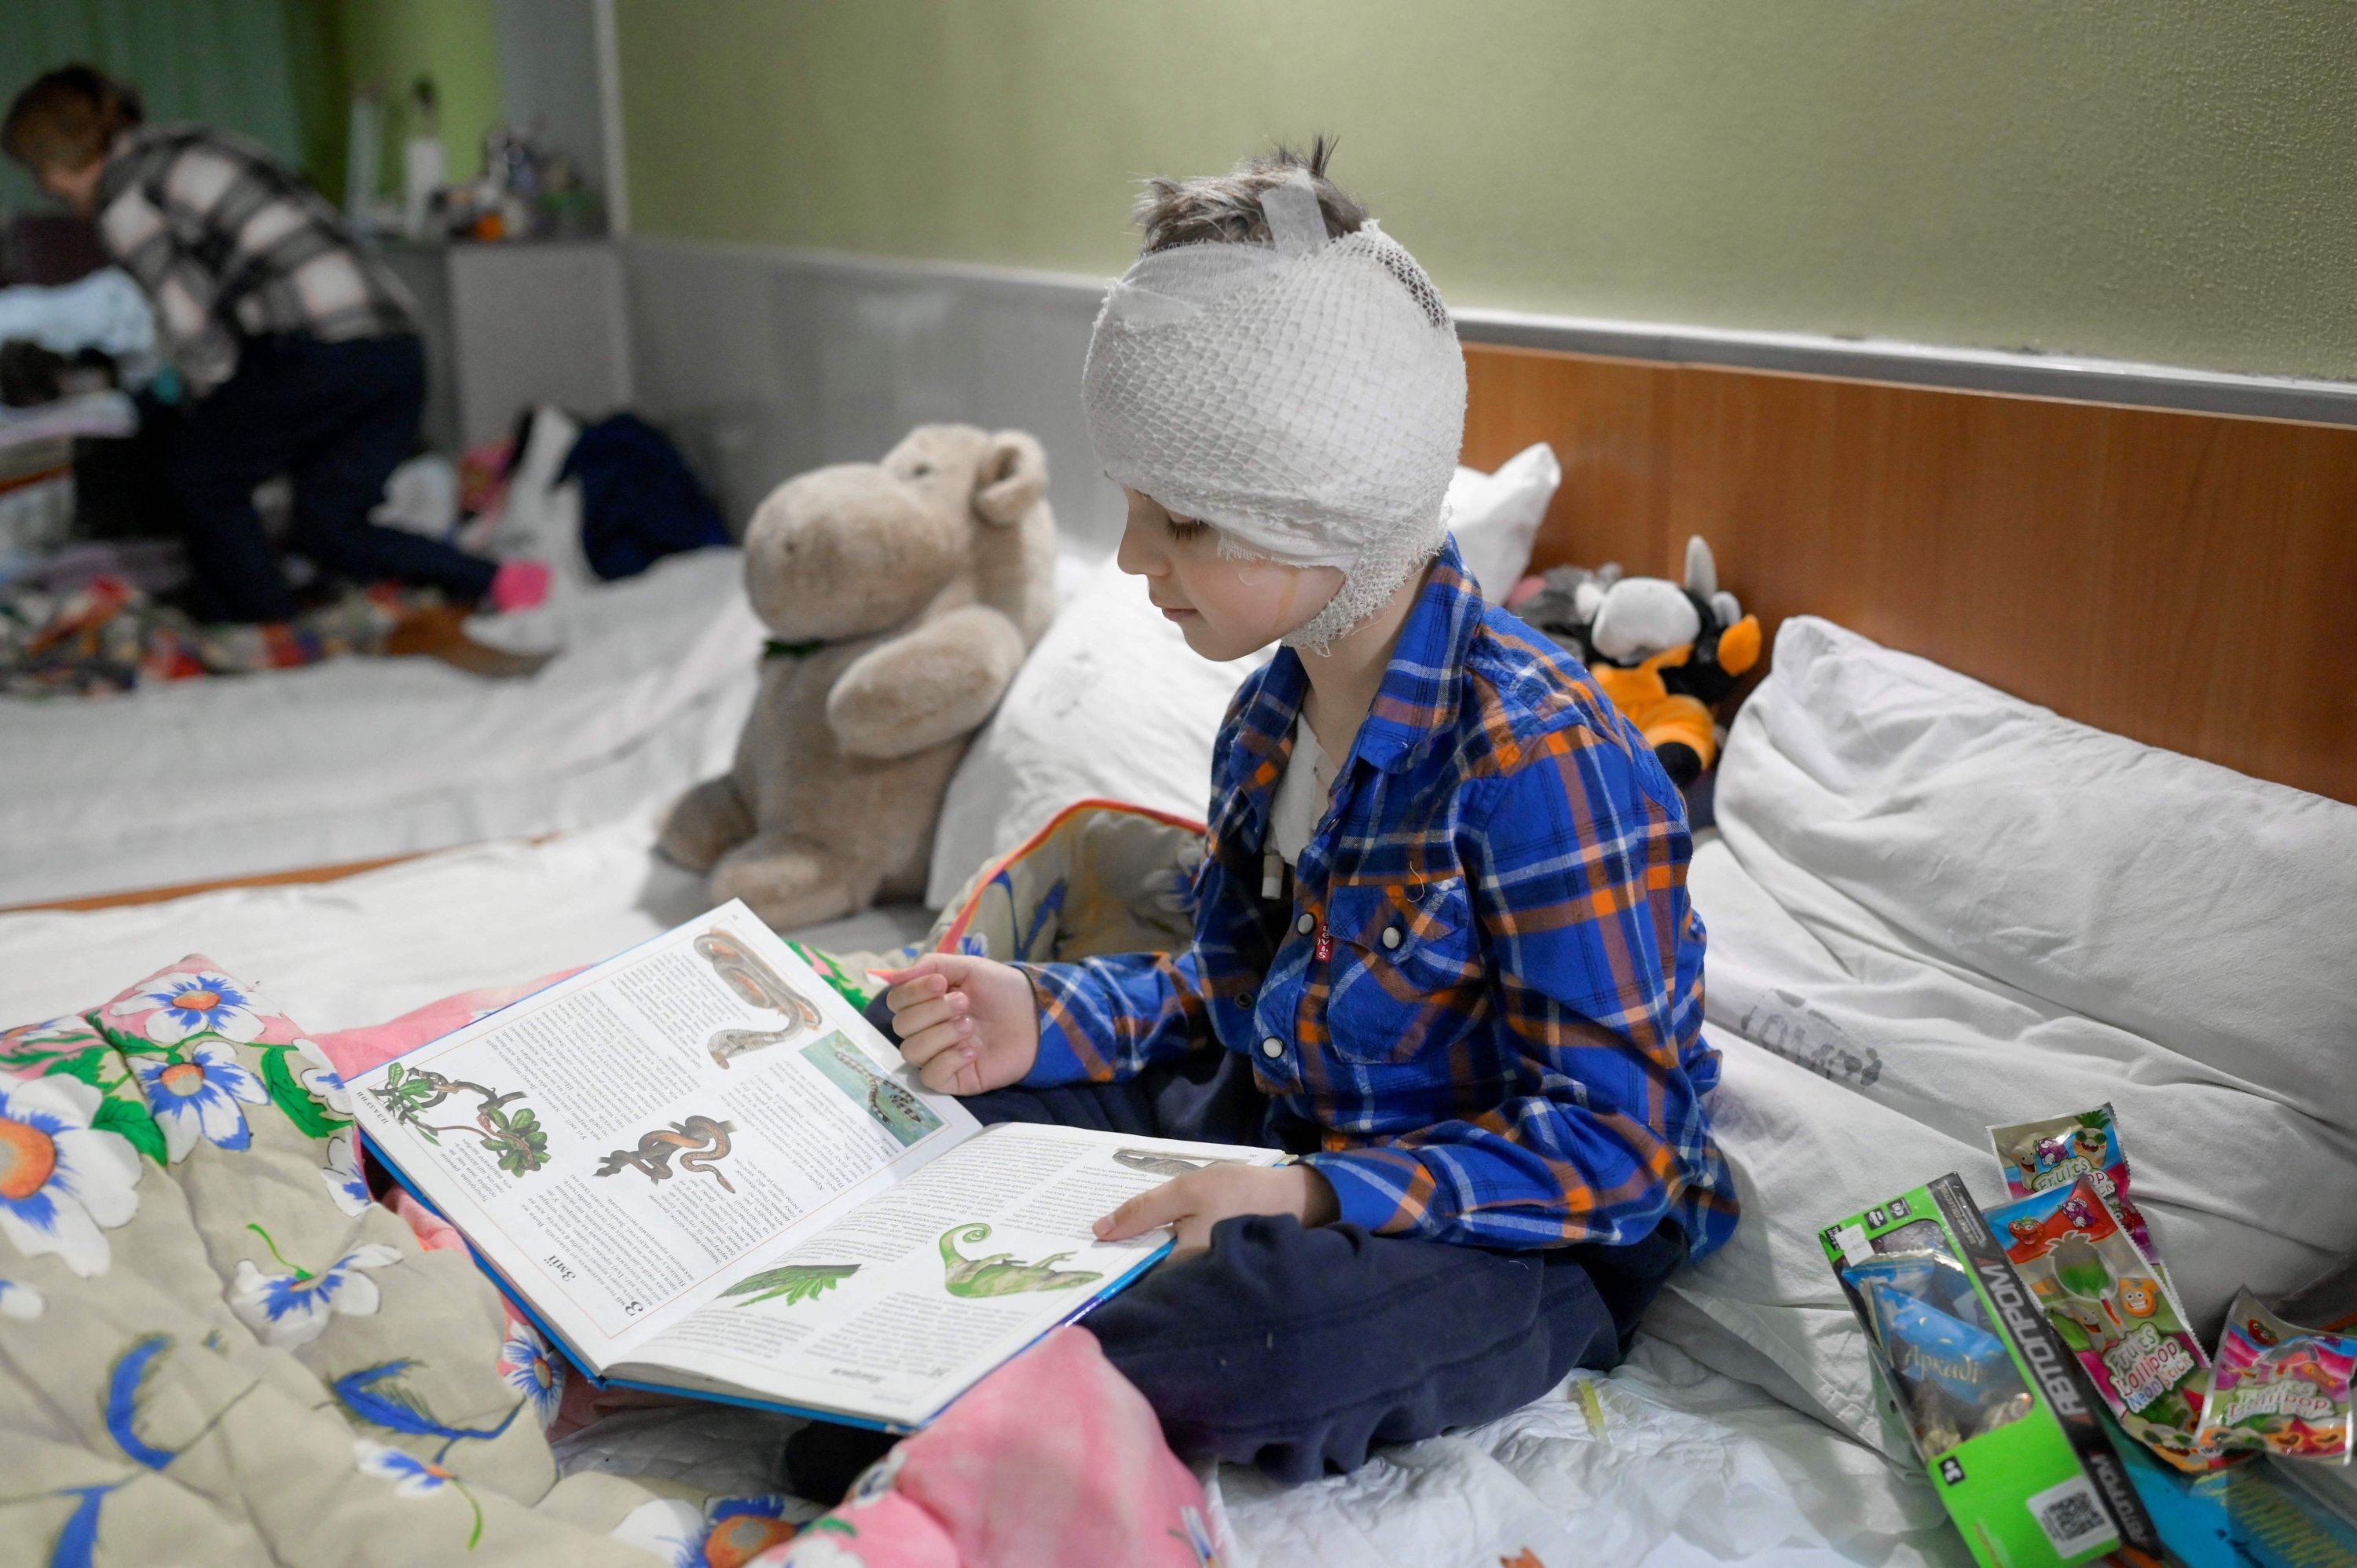 Misha, 5, yang kehilangan ibunya beberapa minggu lalu dan terluka dalam serangan Rusia, membaca buku selama berada di ruang bawah tanah di sebuah rumah sakit, Mykolaiv, Ukraina, 26 Maret 2022. (AFP Photo)